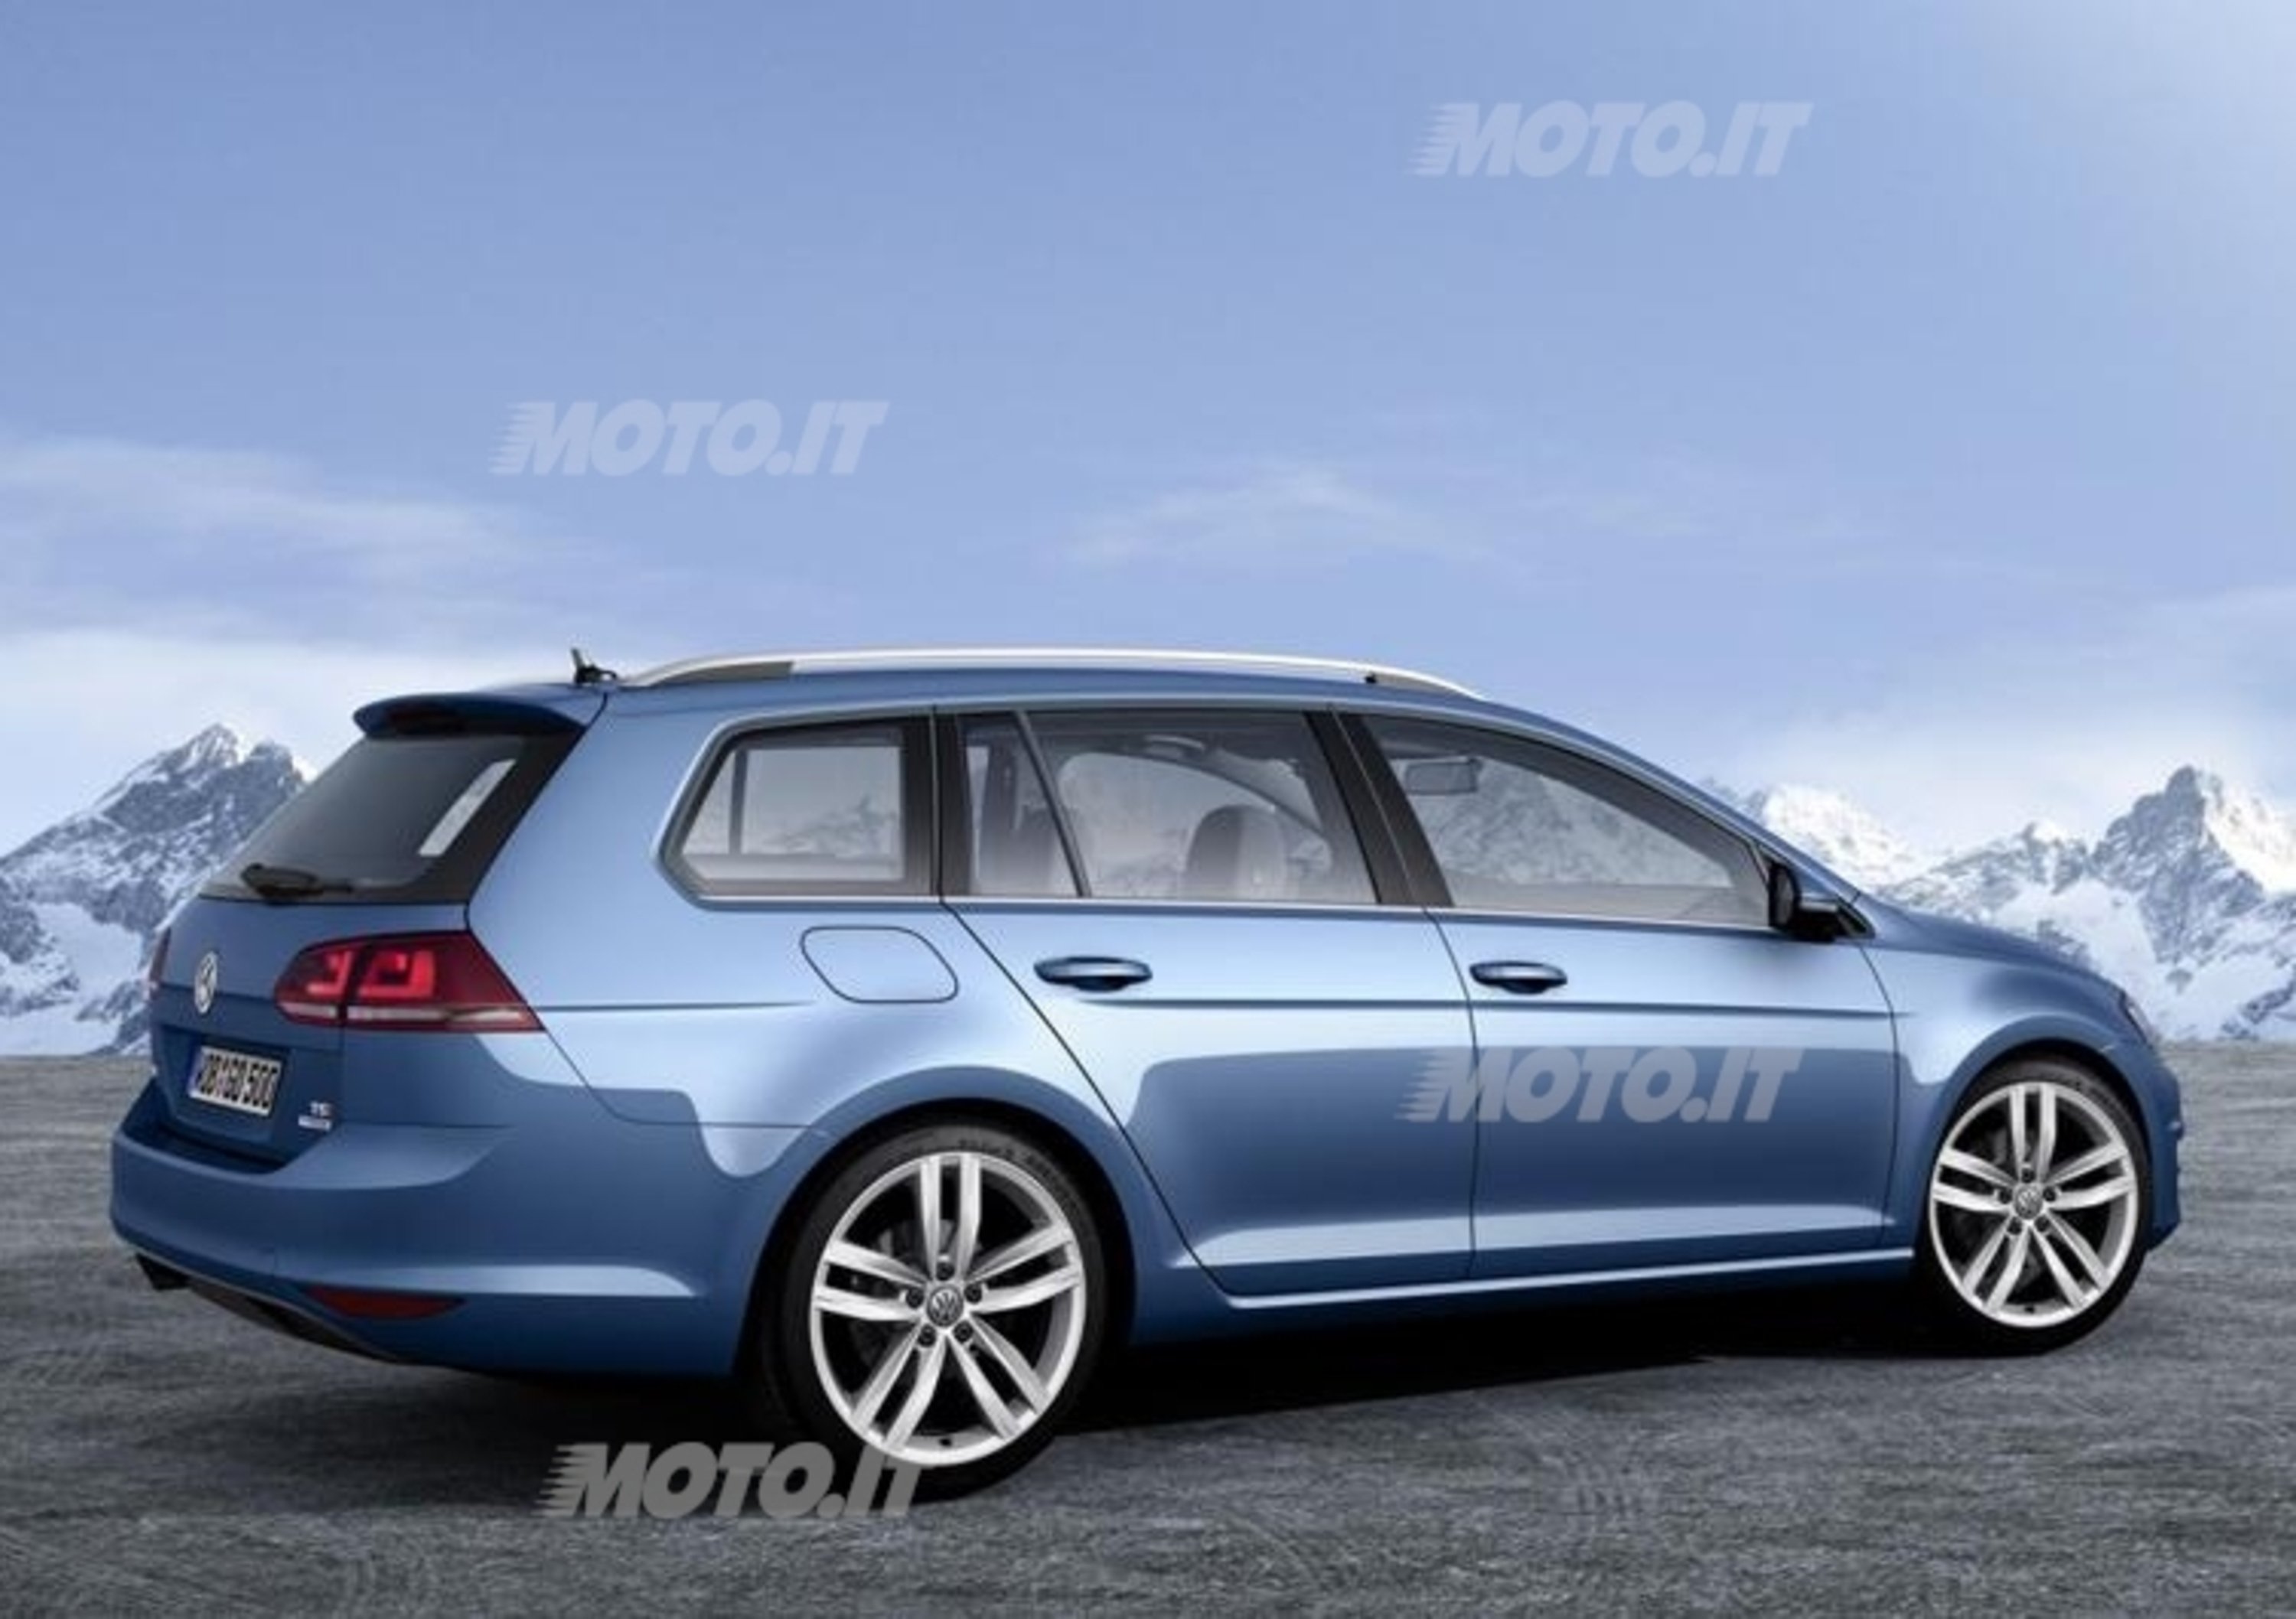 Nuova Volkswagen Golf Variant: ecco la station wagon